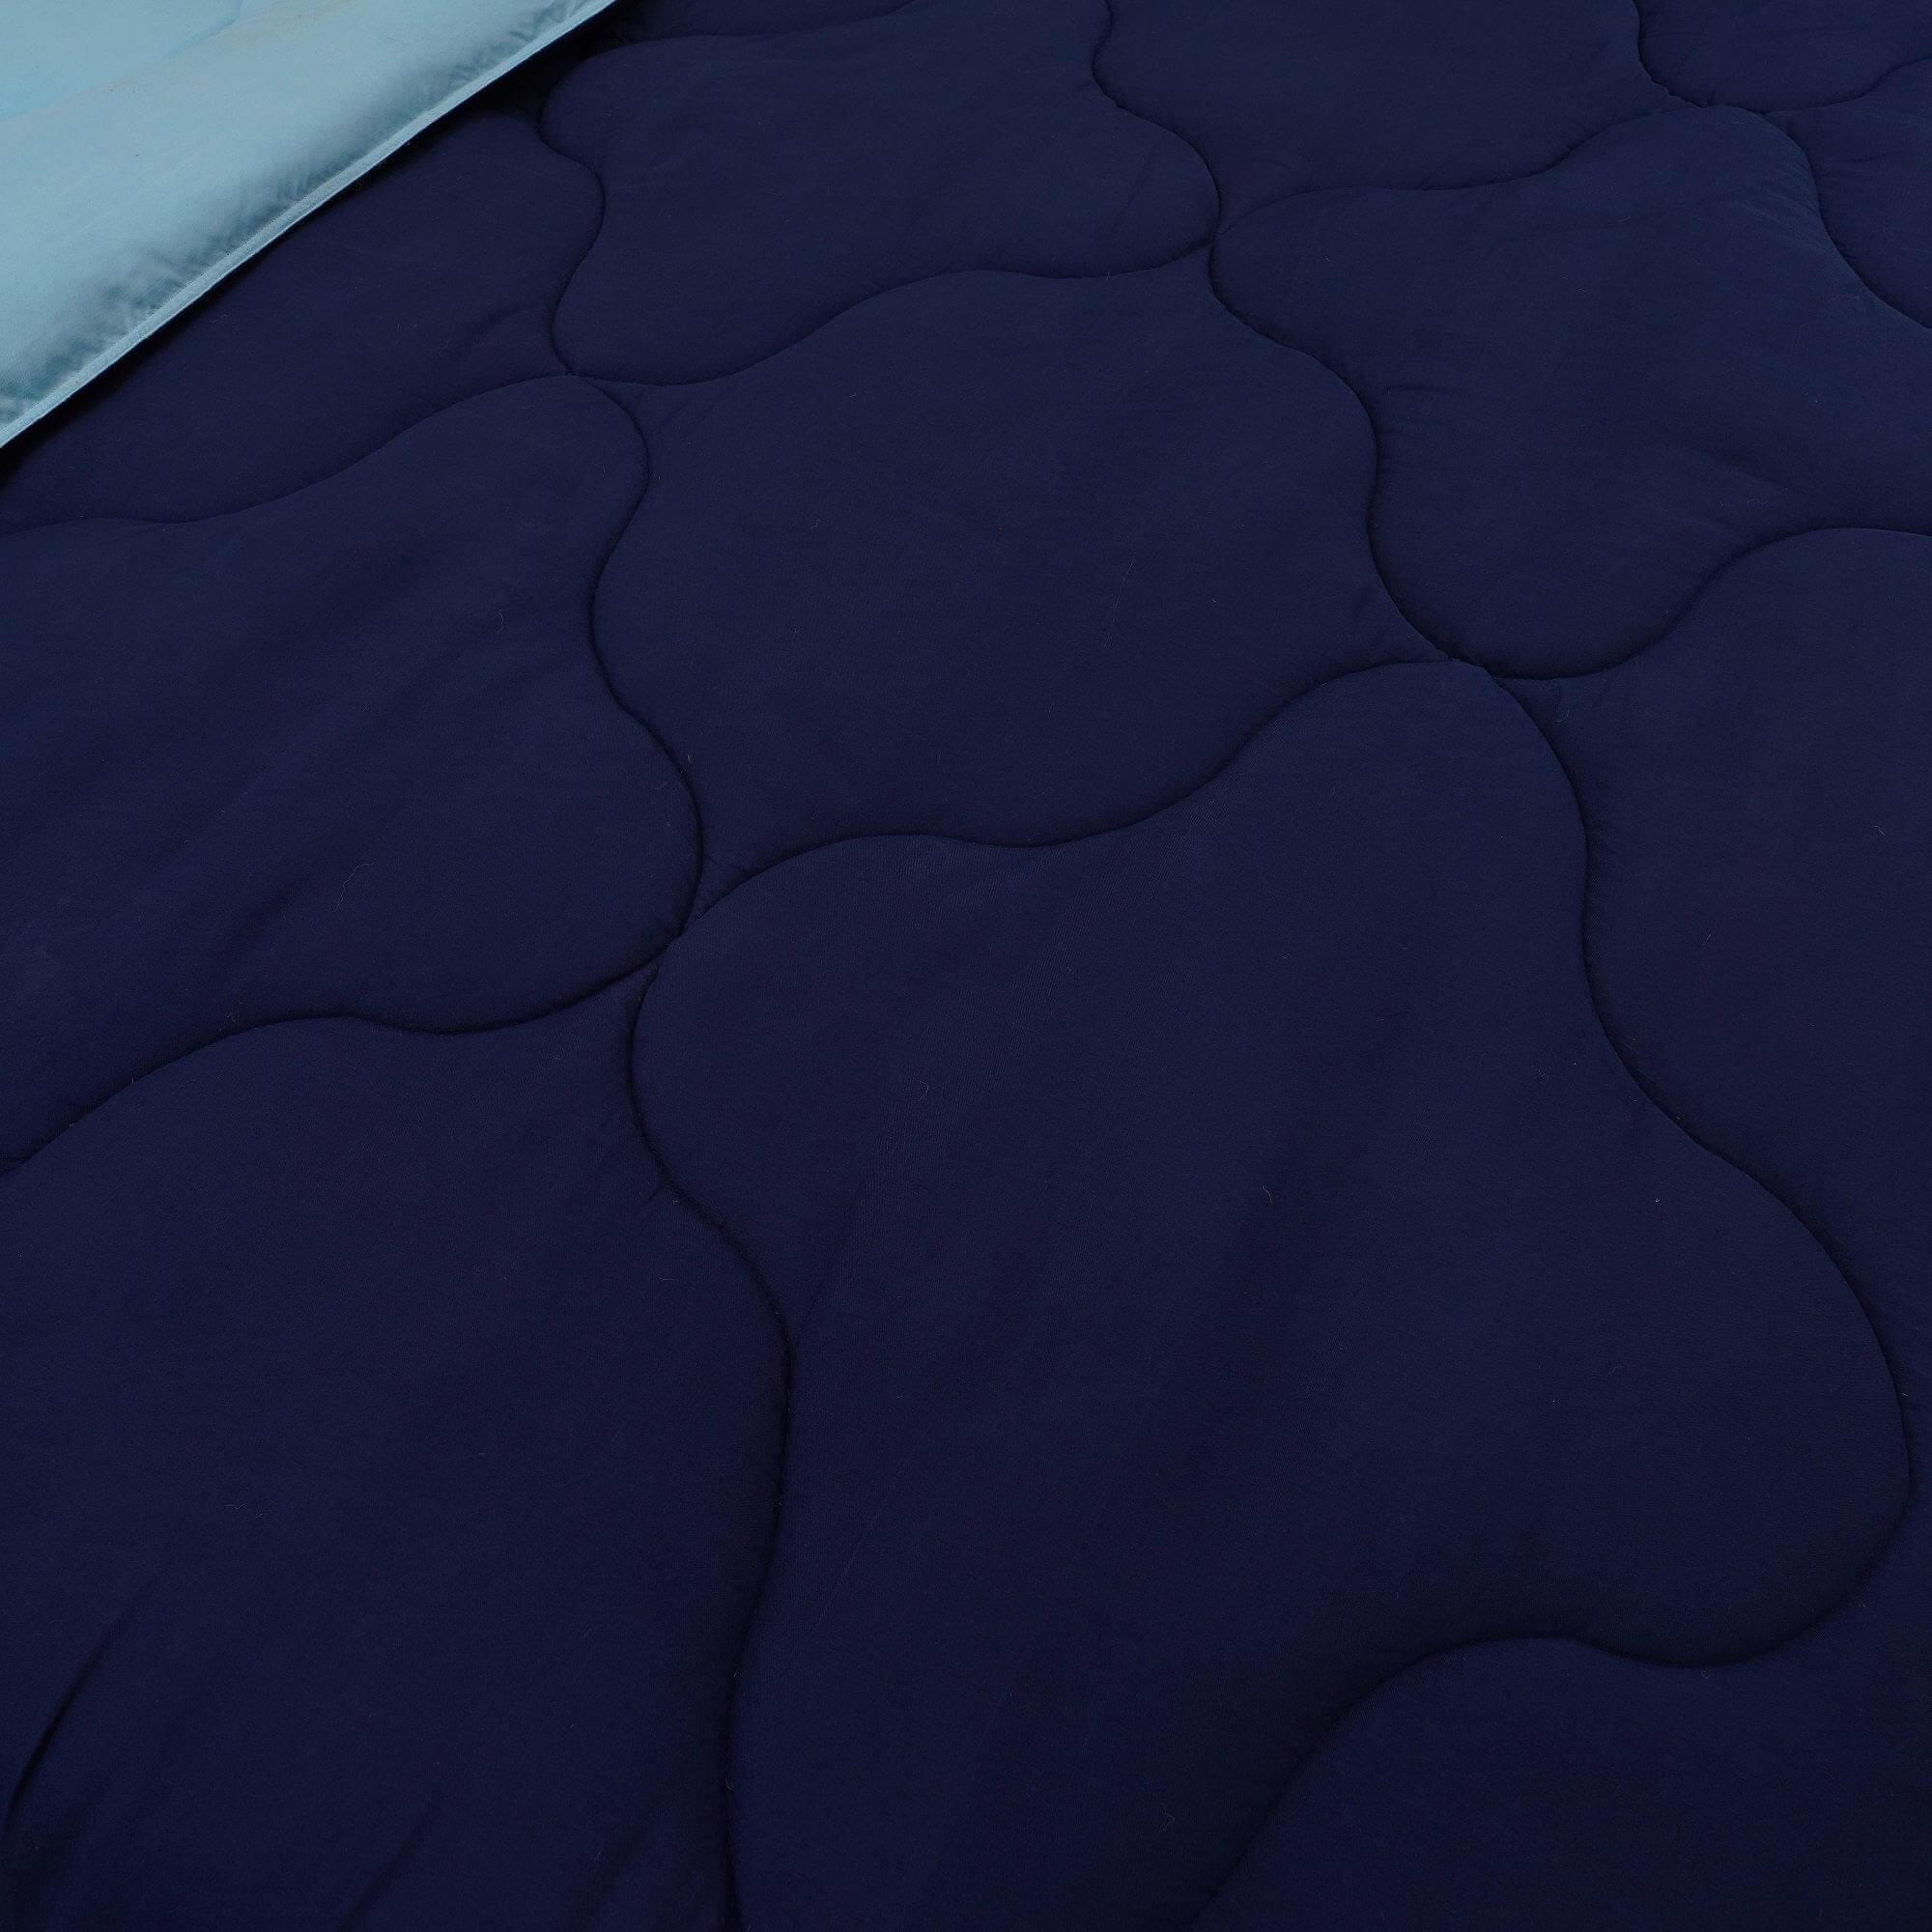 AC Comforter Blanket, Microfiber Reversible (Navy Blue, Baby blue)